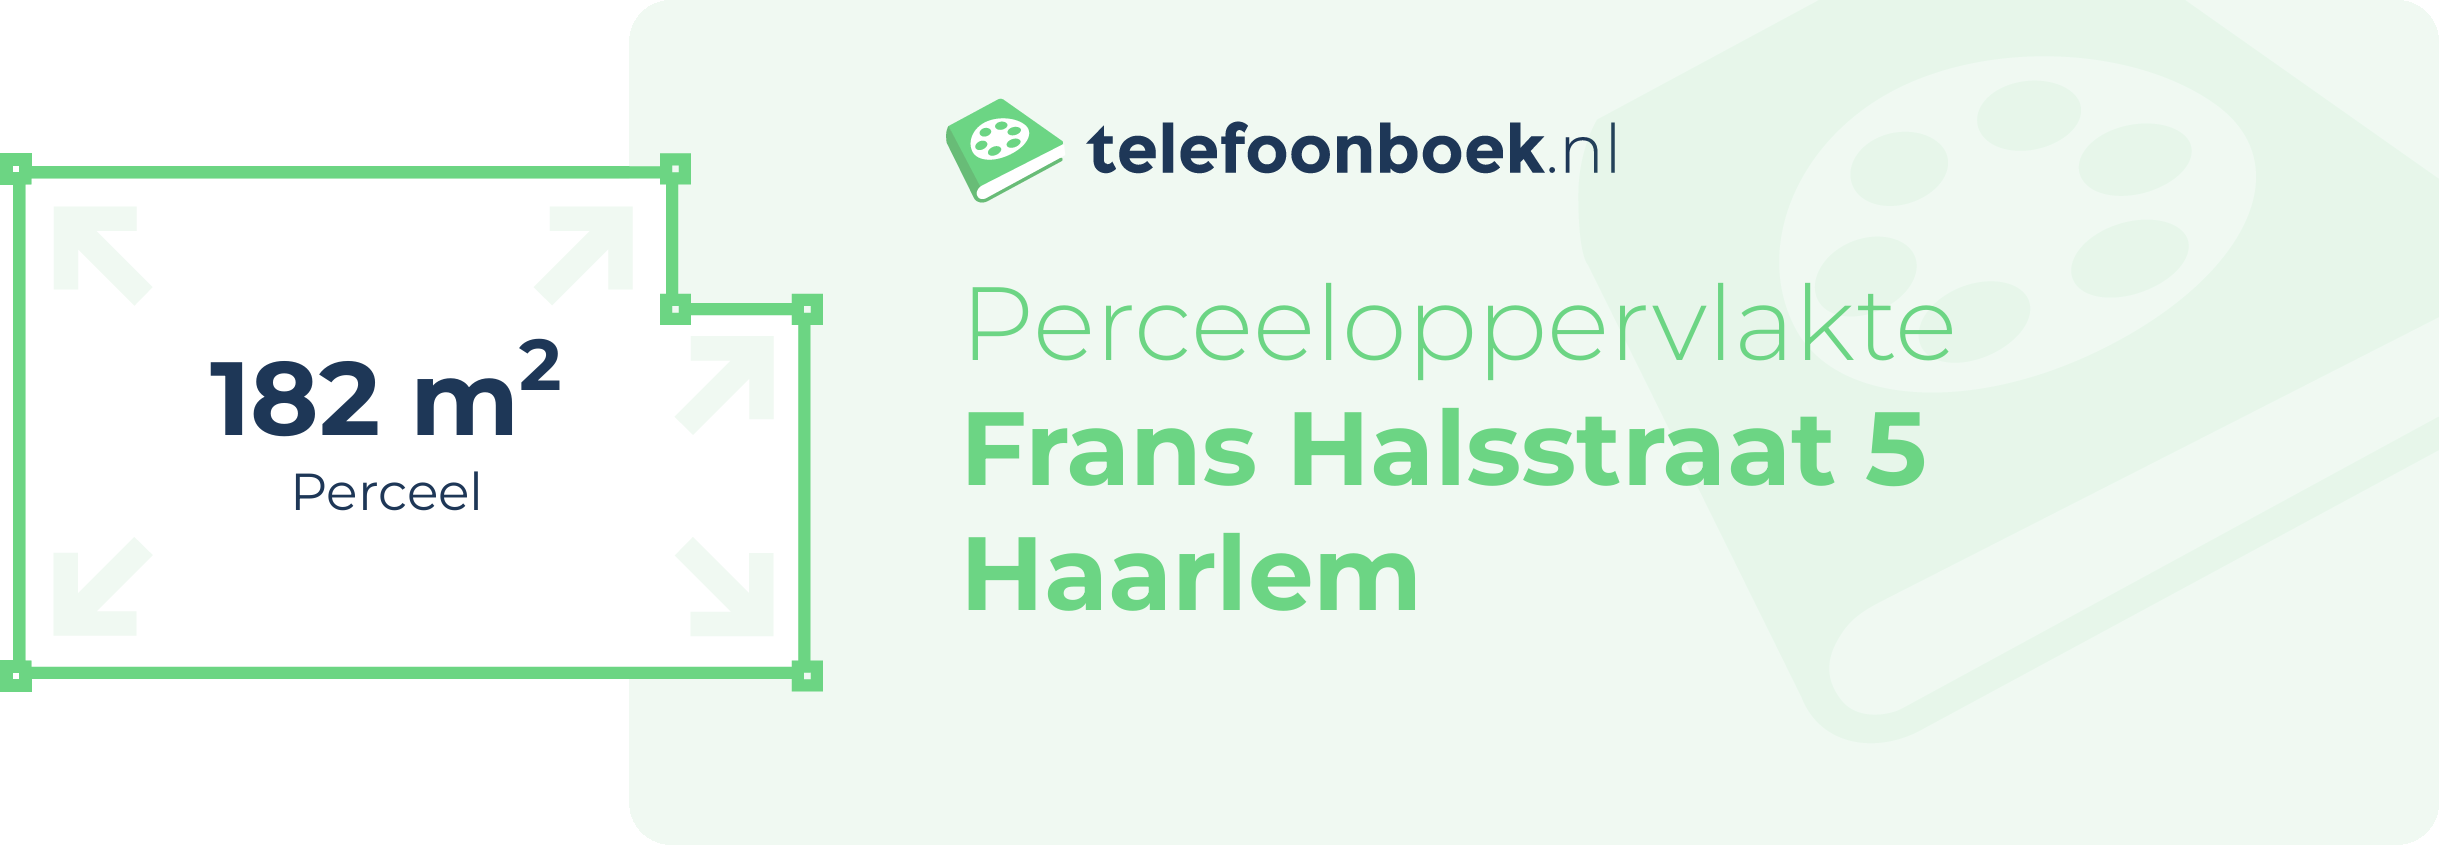 Perceeloppervlakte Frans Halsstraat 5 Haarlem